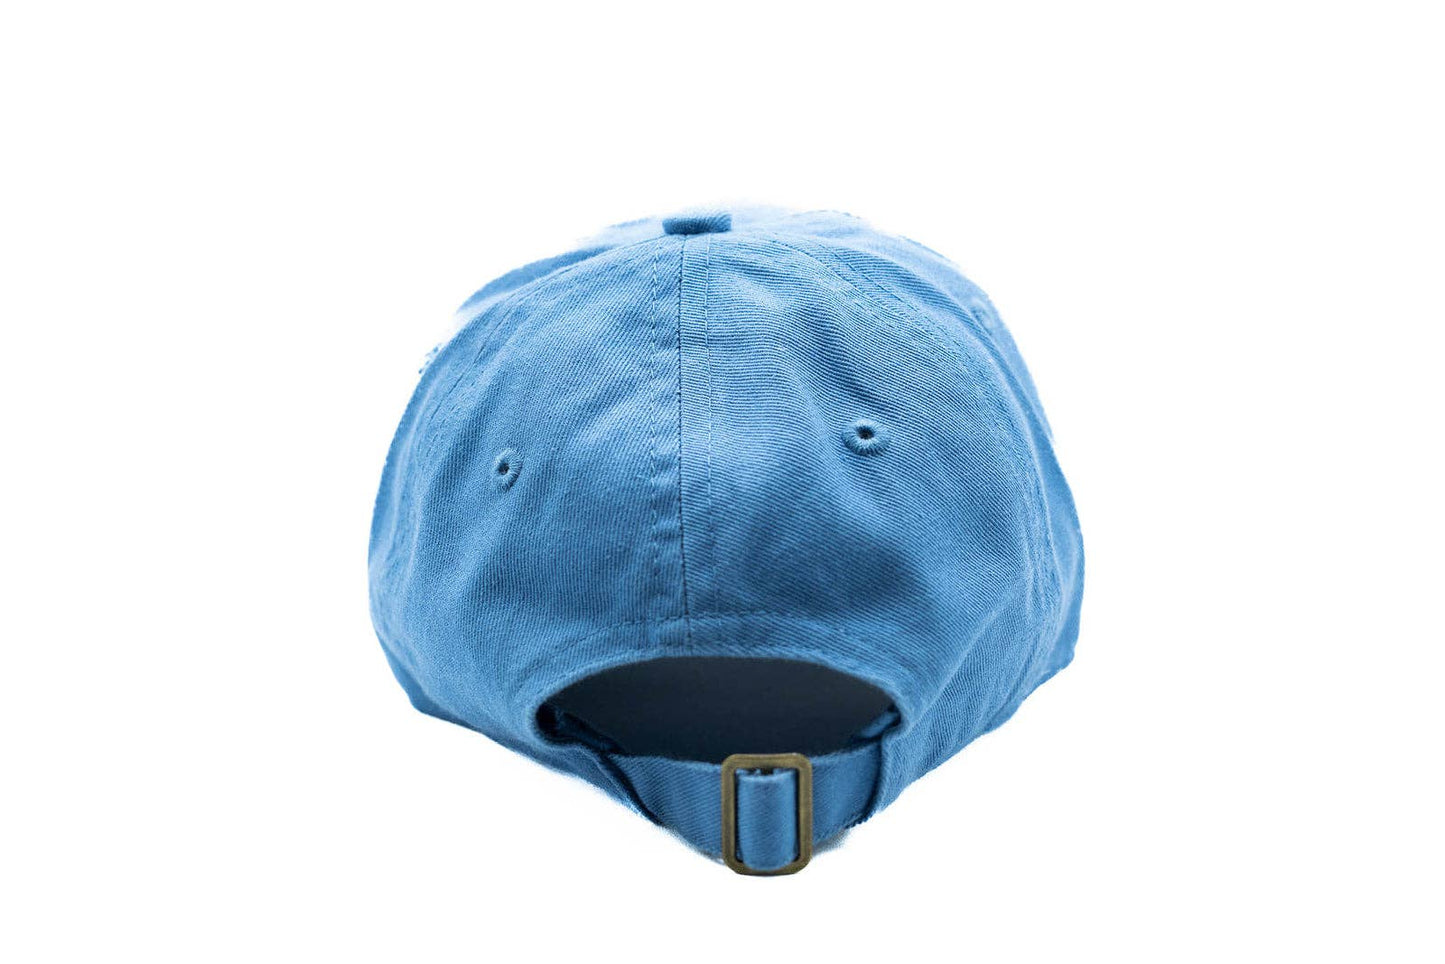 Cornflower Blue Big Bro Hat: Toddler (1Y-4Y)